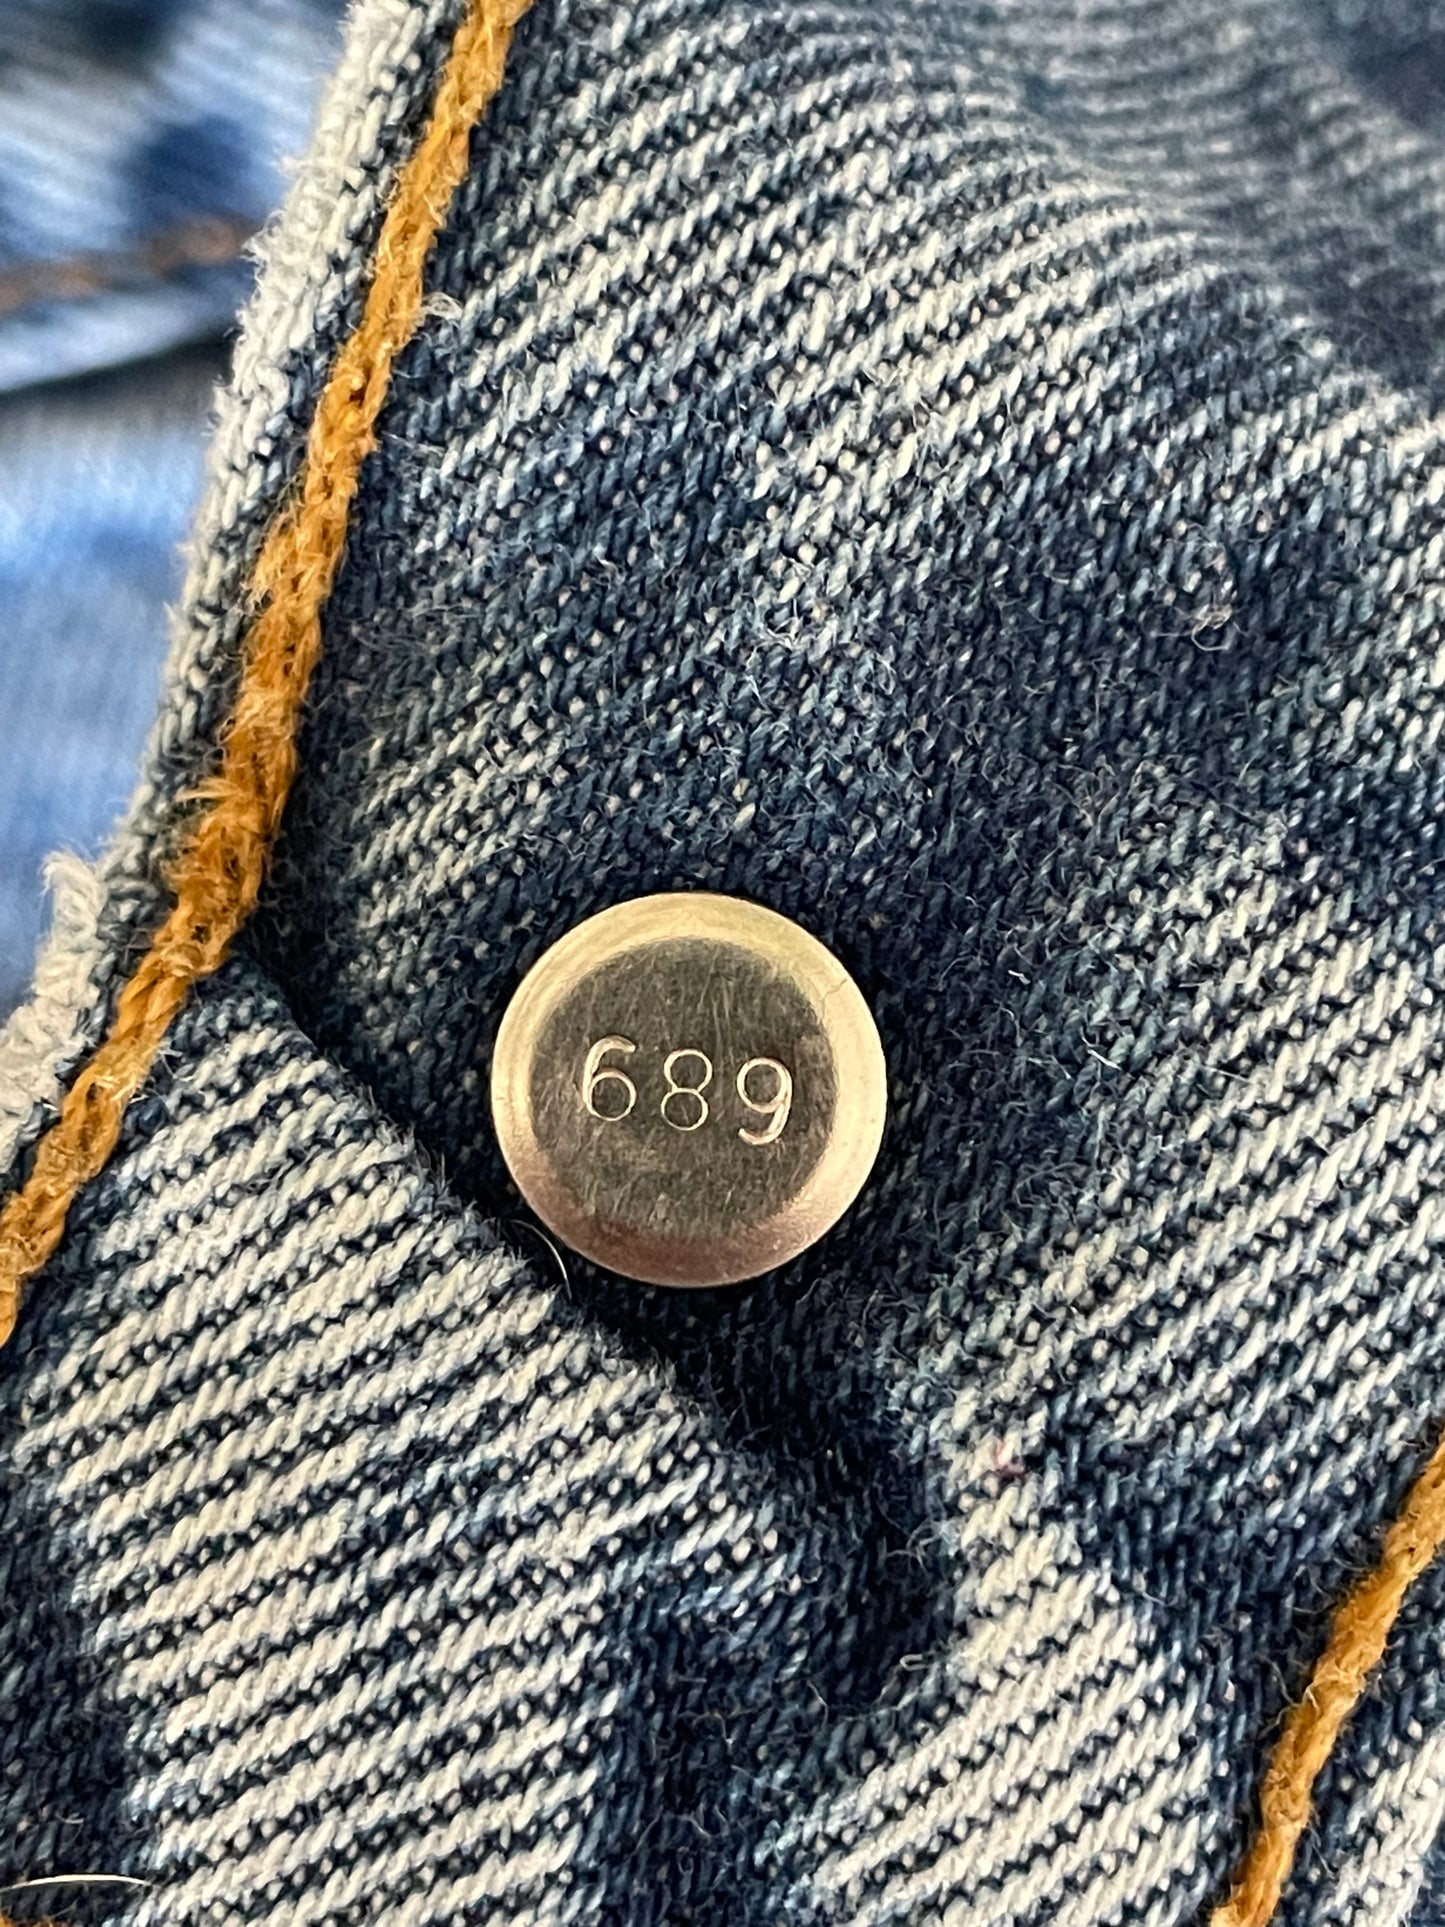 90s Levi’s 505 Jeans